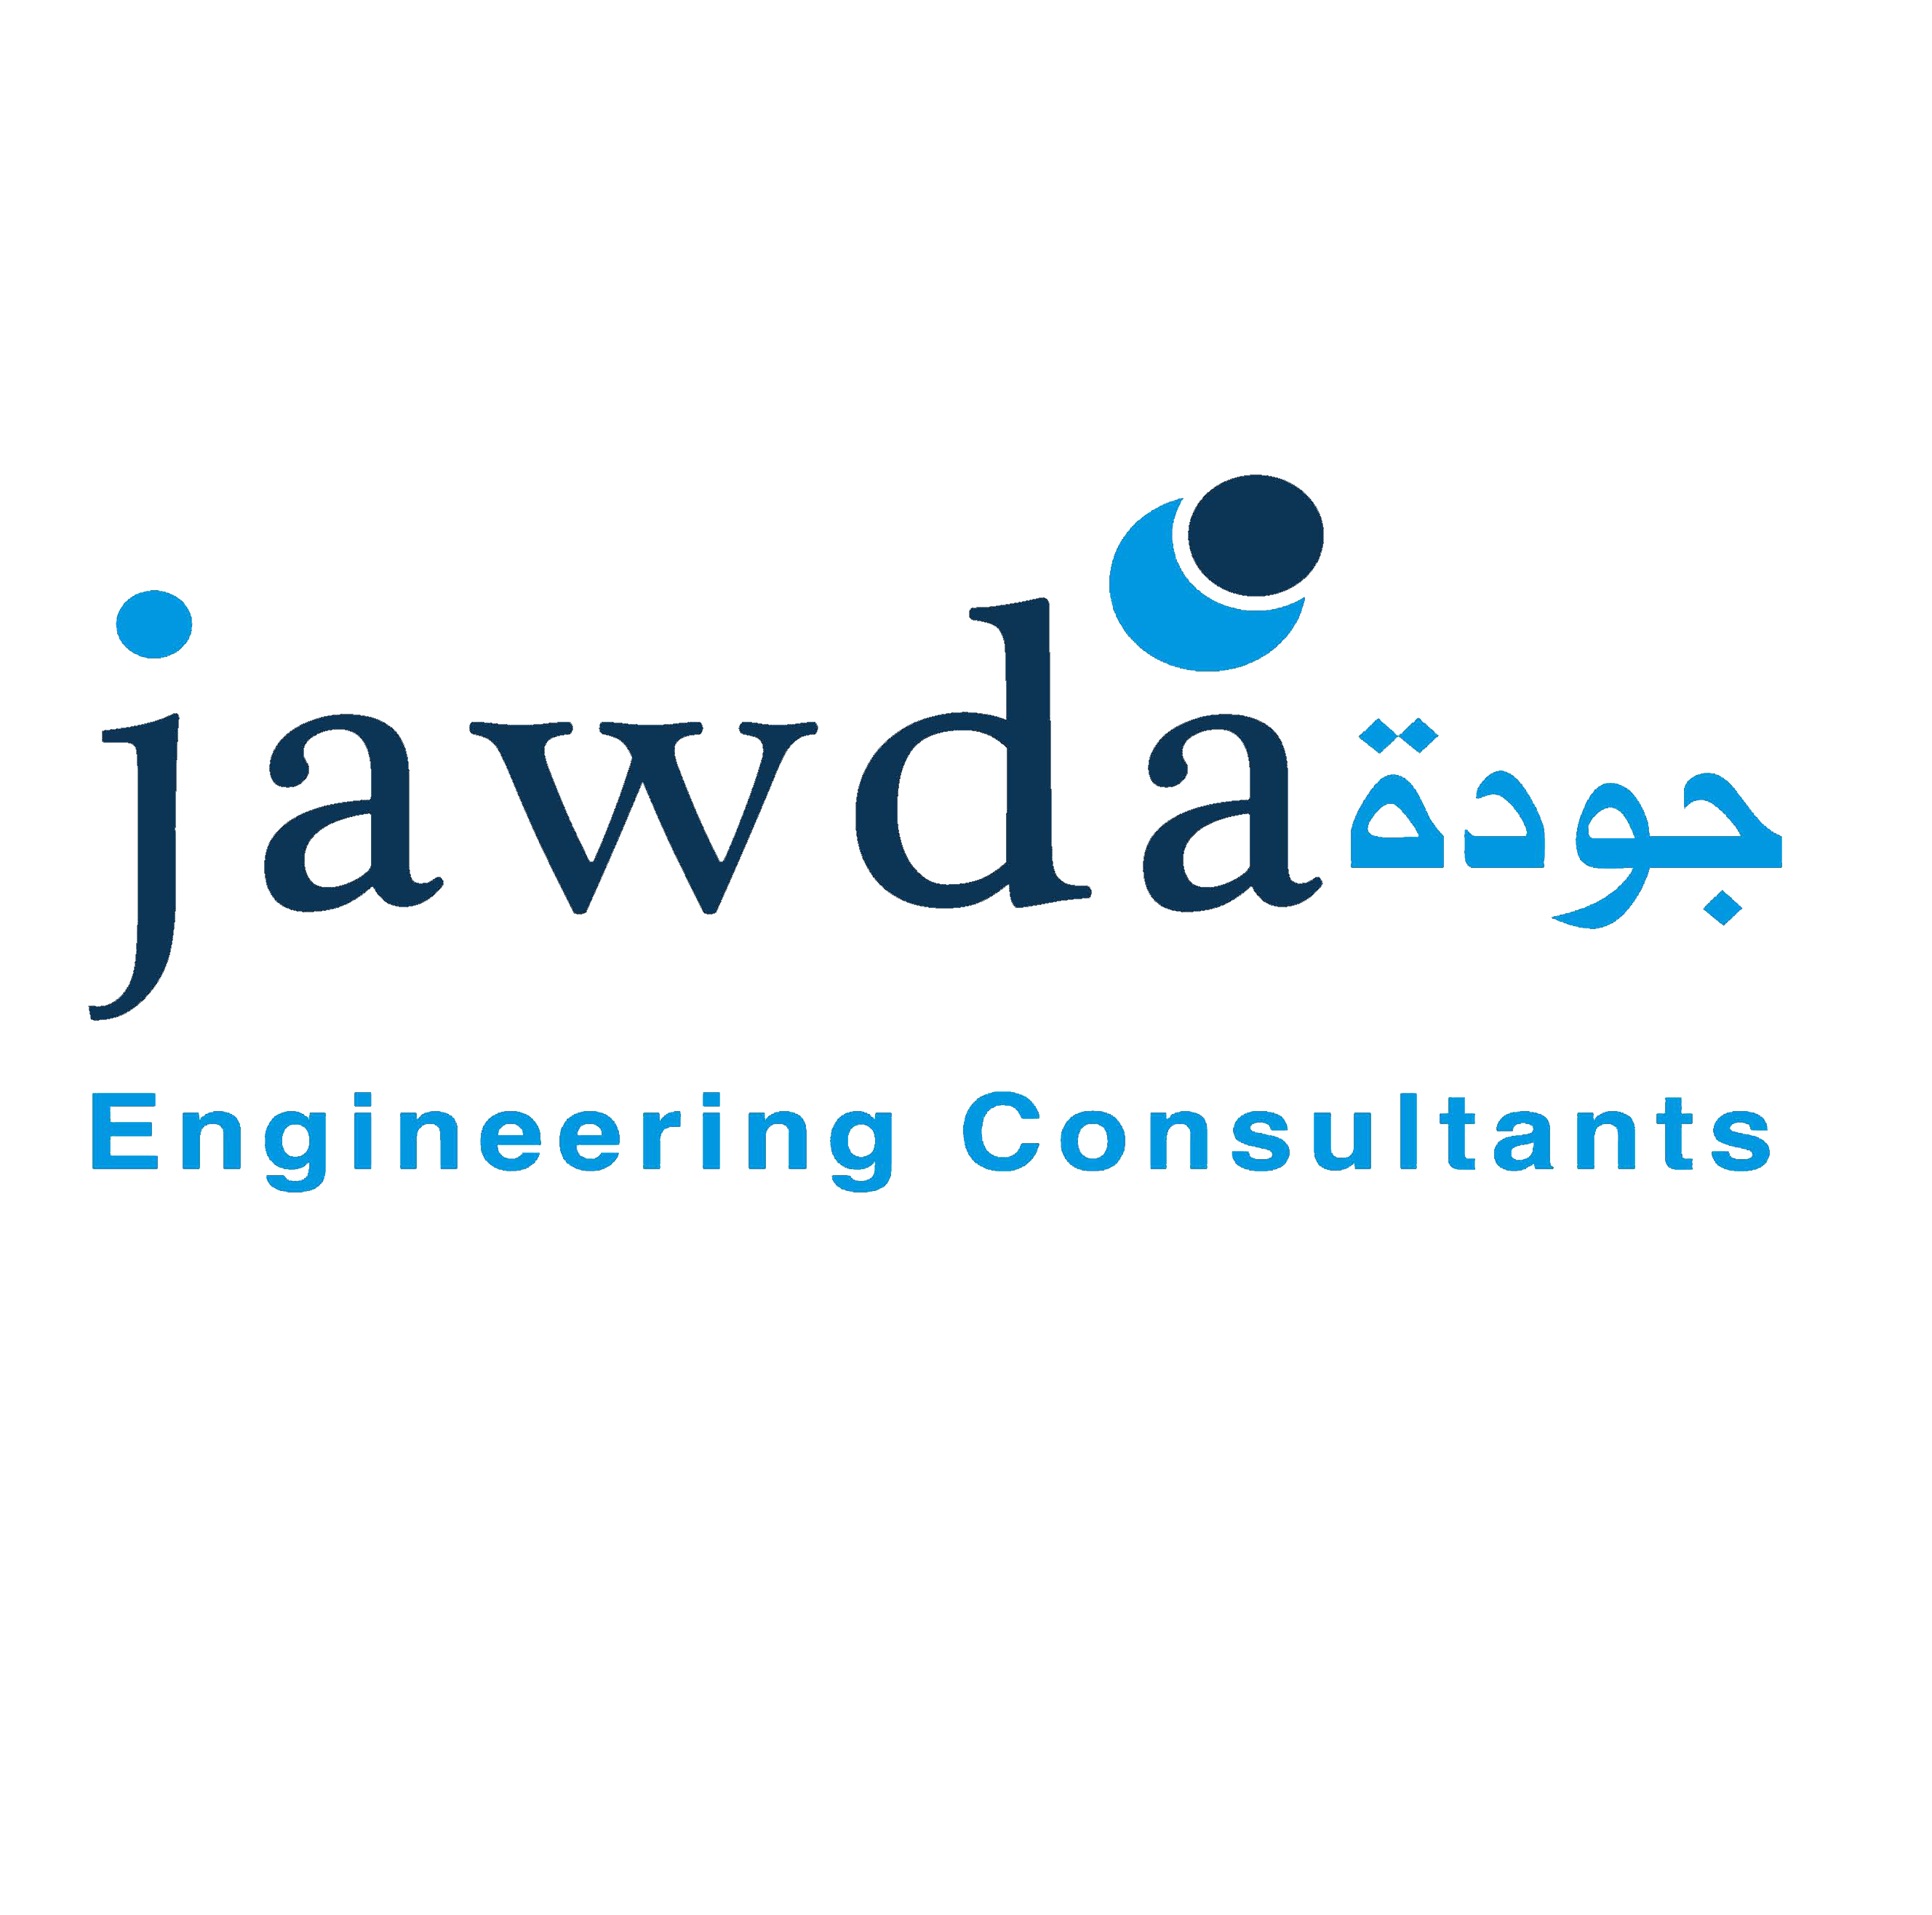 Jawda engineering consultant